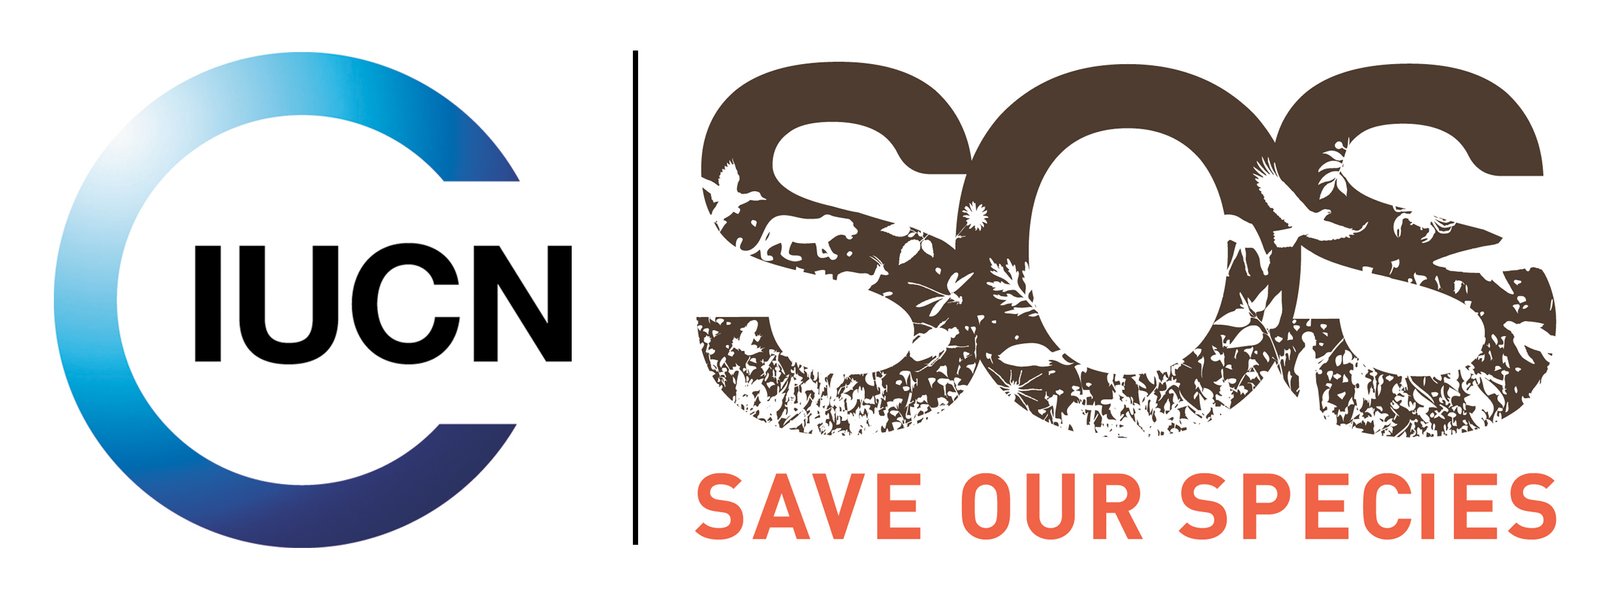 IUCN SOS logo